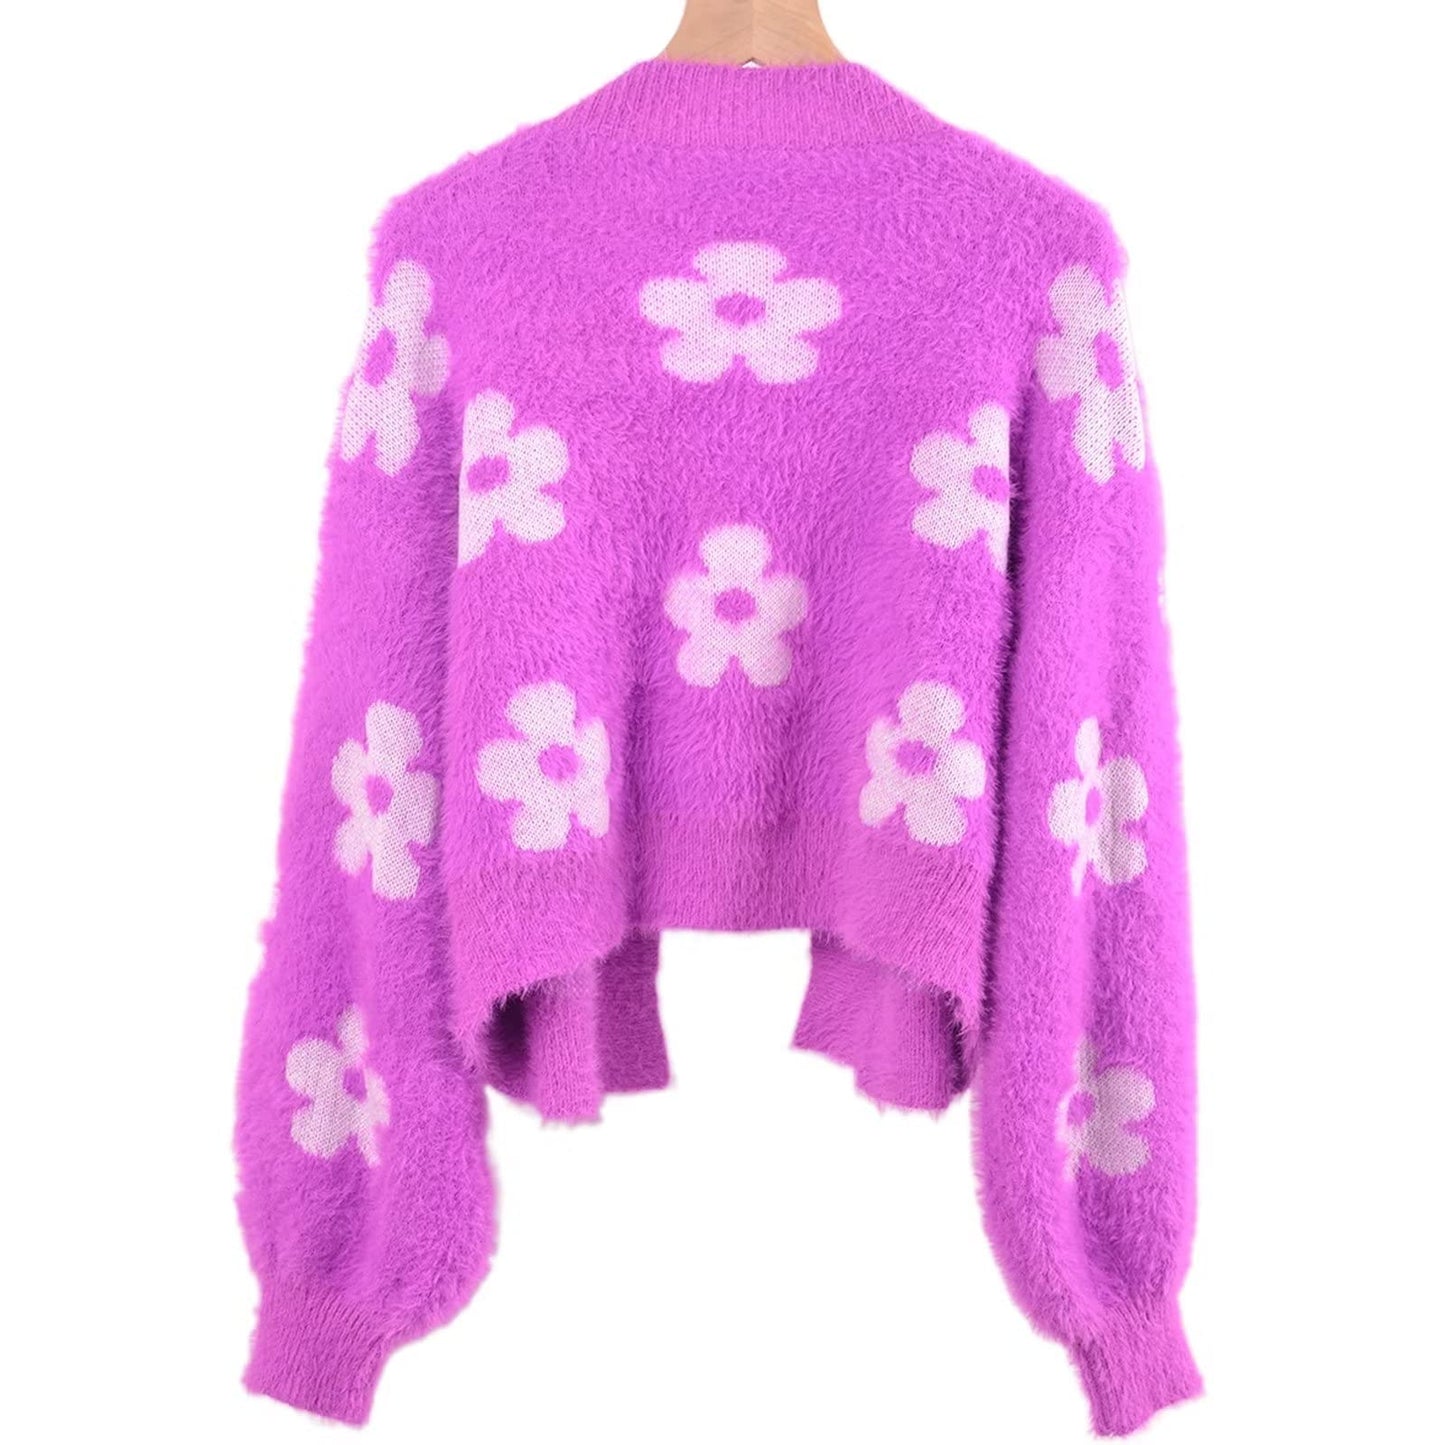 YUAKOU Women's Flower Long Sleeve Open Front Short Cardigan Casual Loose V Neck Down Knit Cardigan Sweaters Outwear